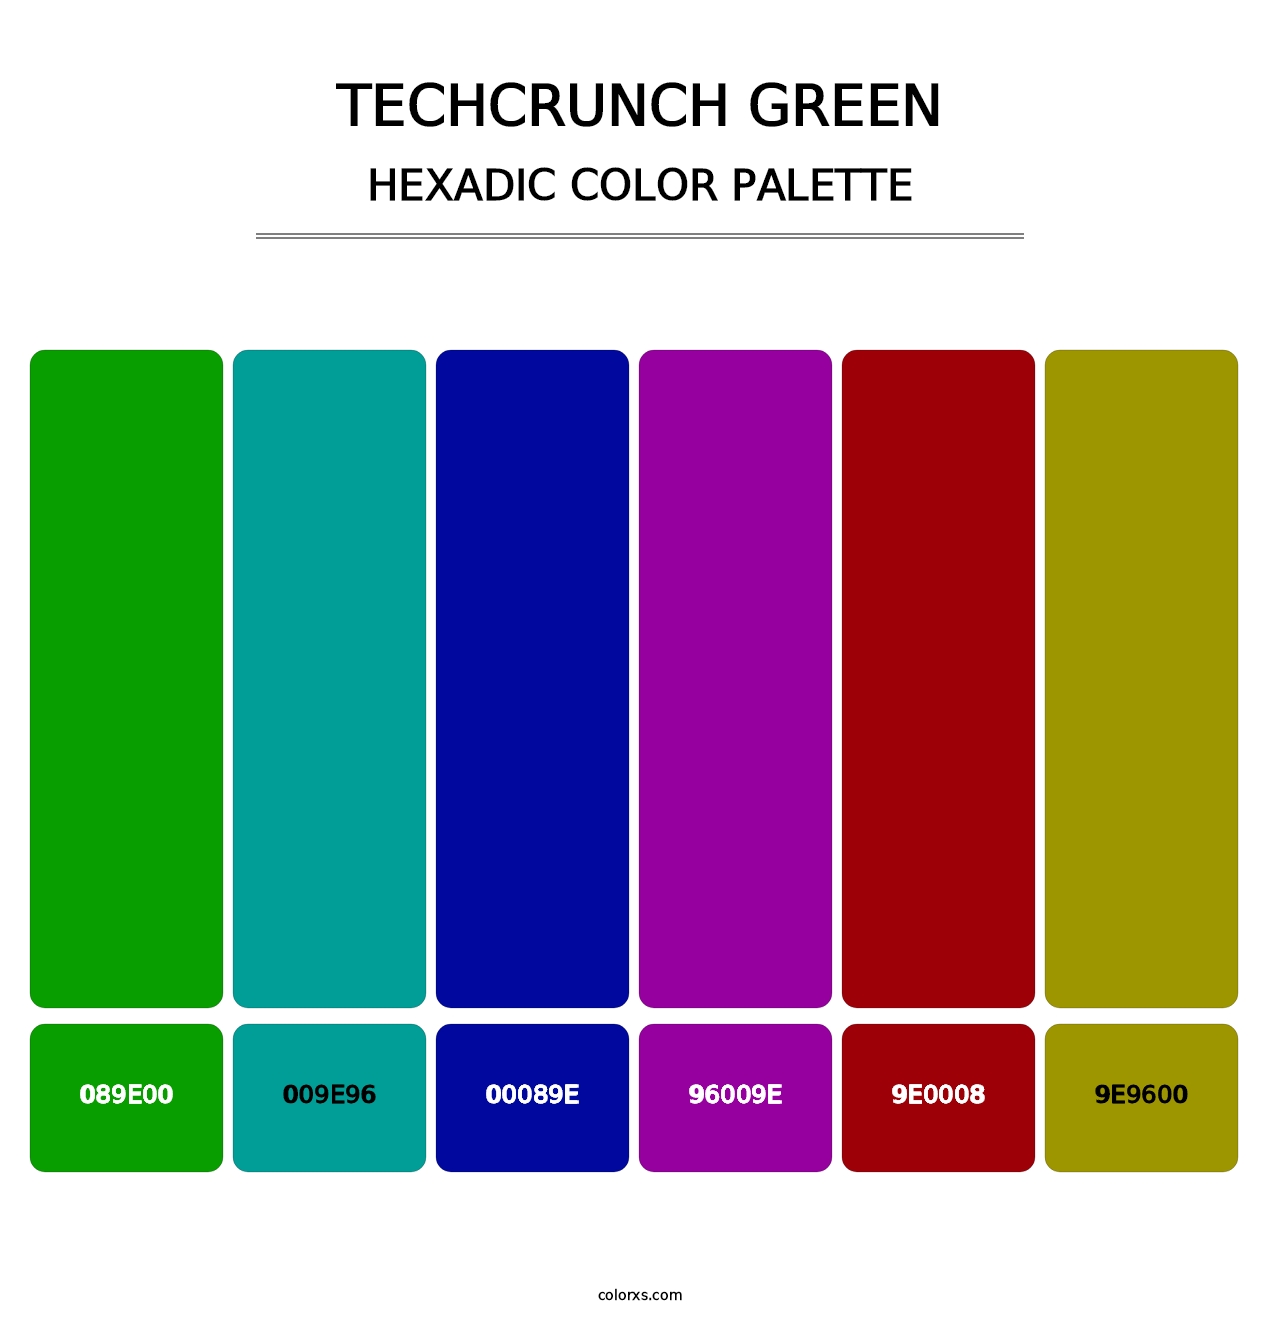 TechCrunch Green - Hexadic Color Palette